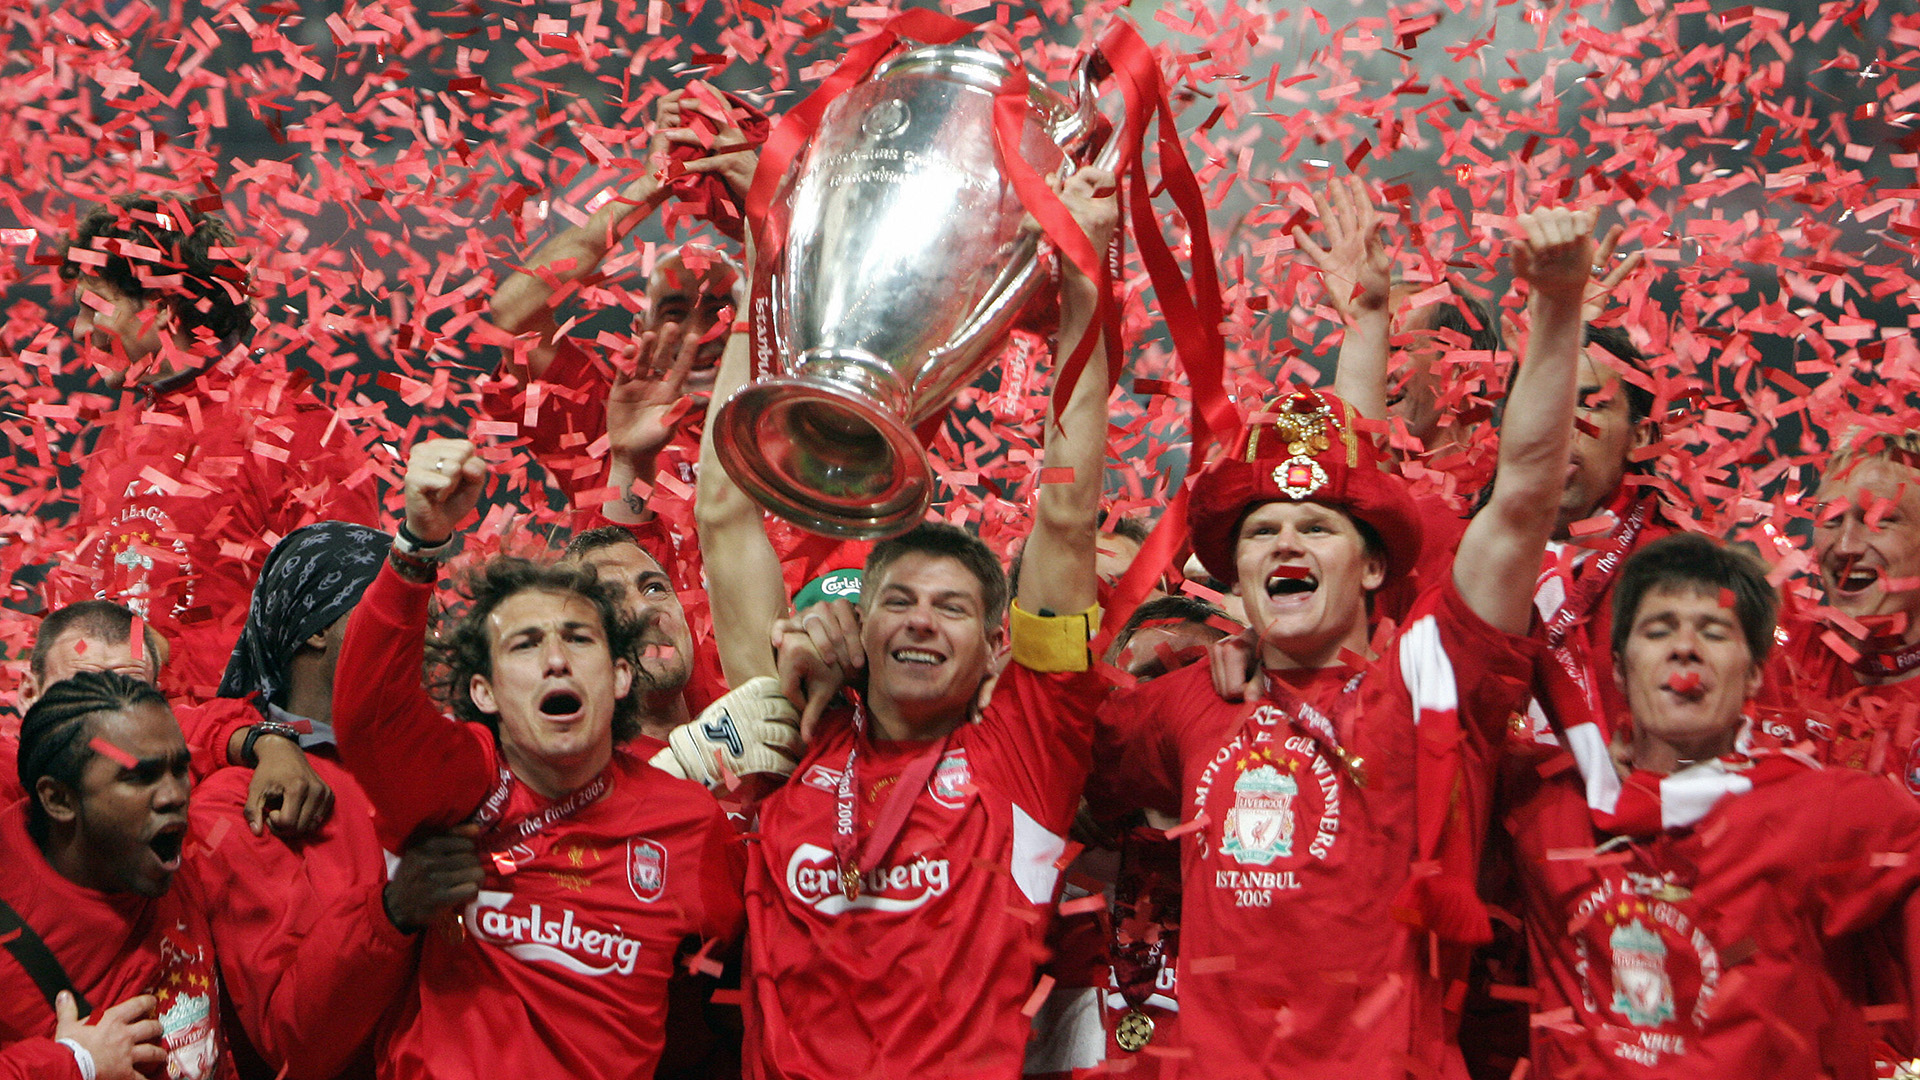 2005 Milan Liverpool Gerrard - Goal.com1920 x 1080